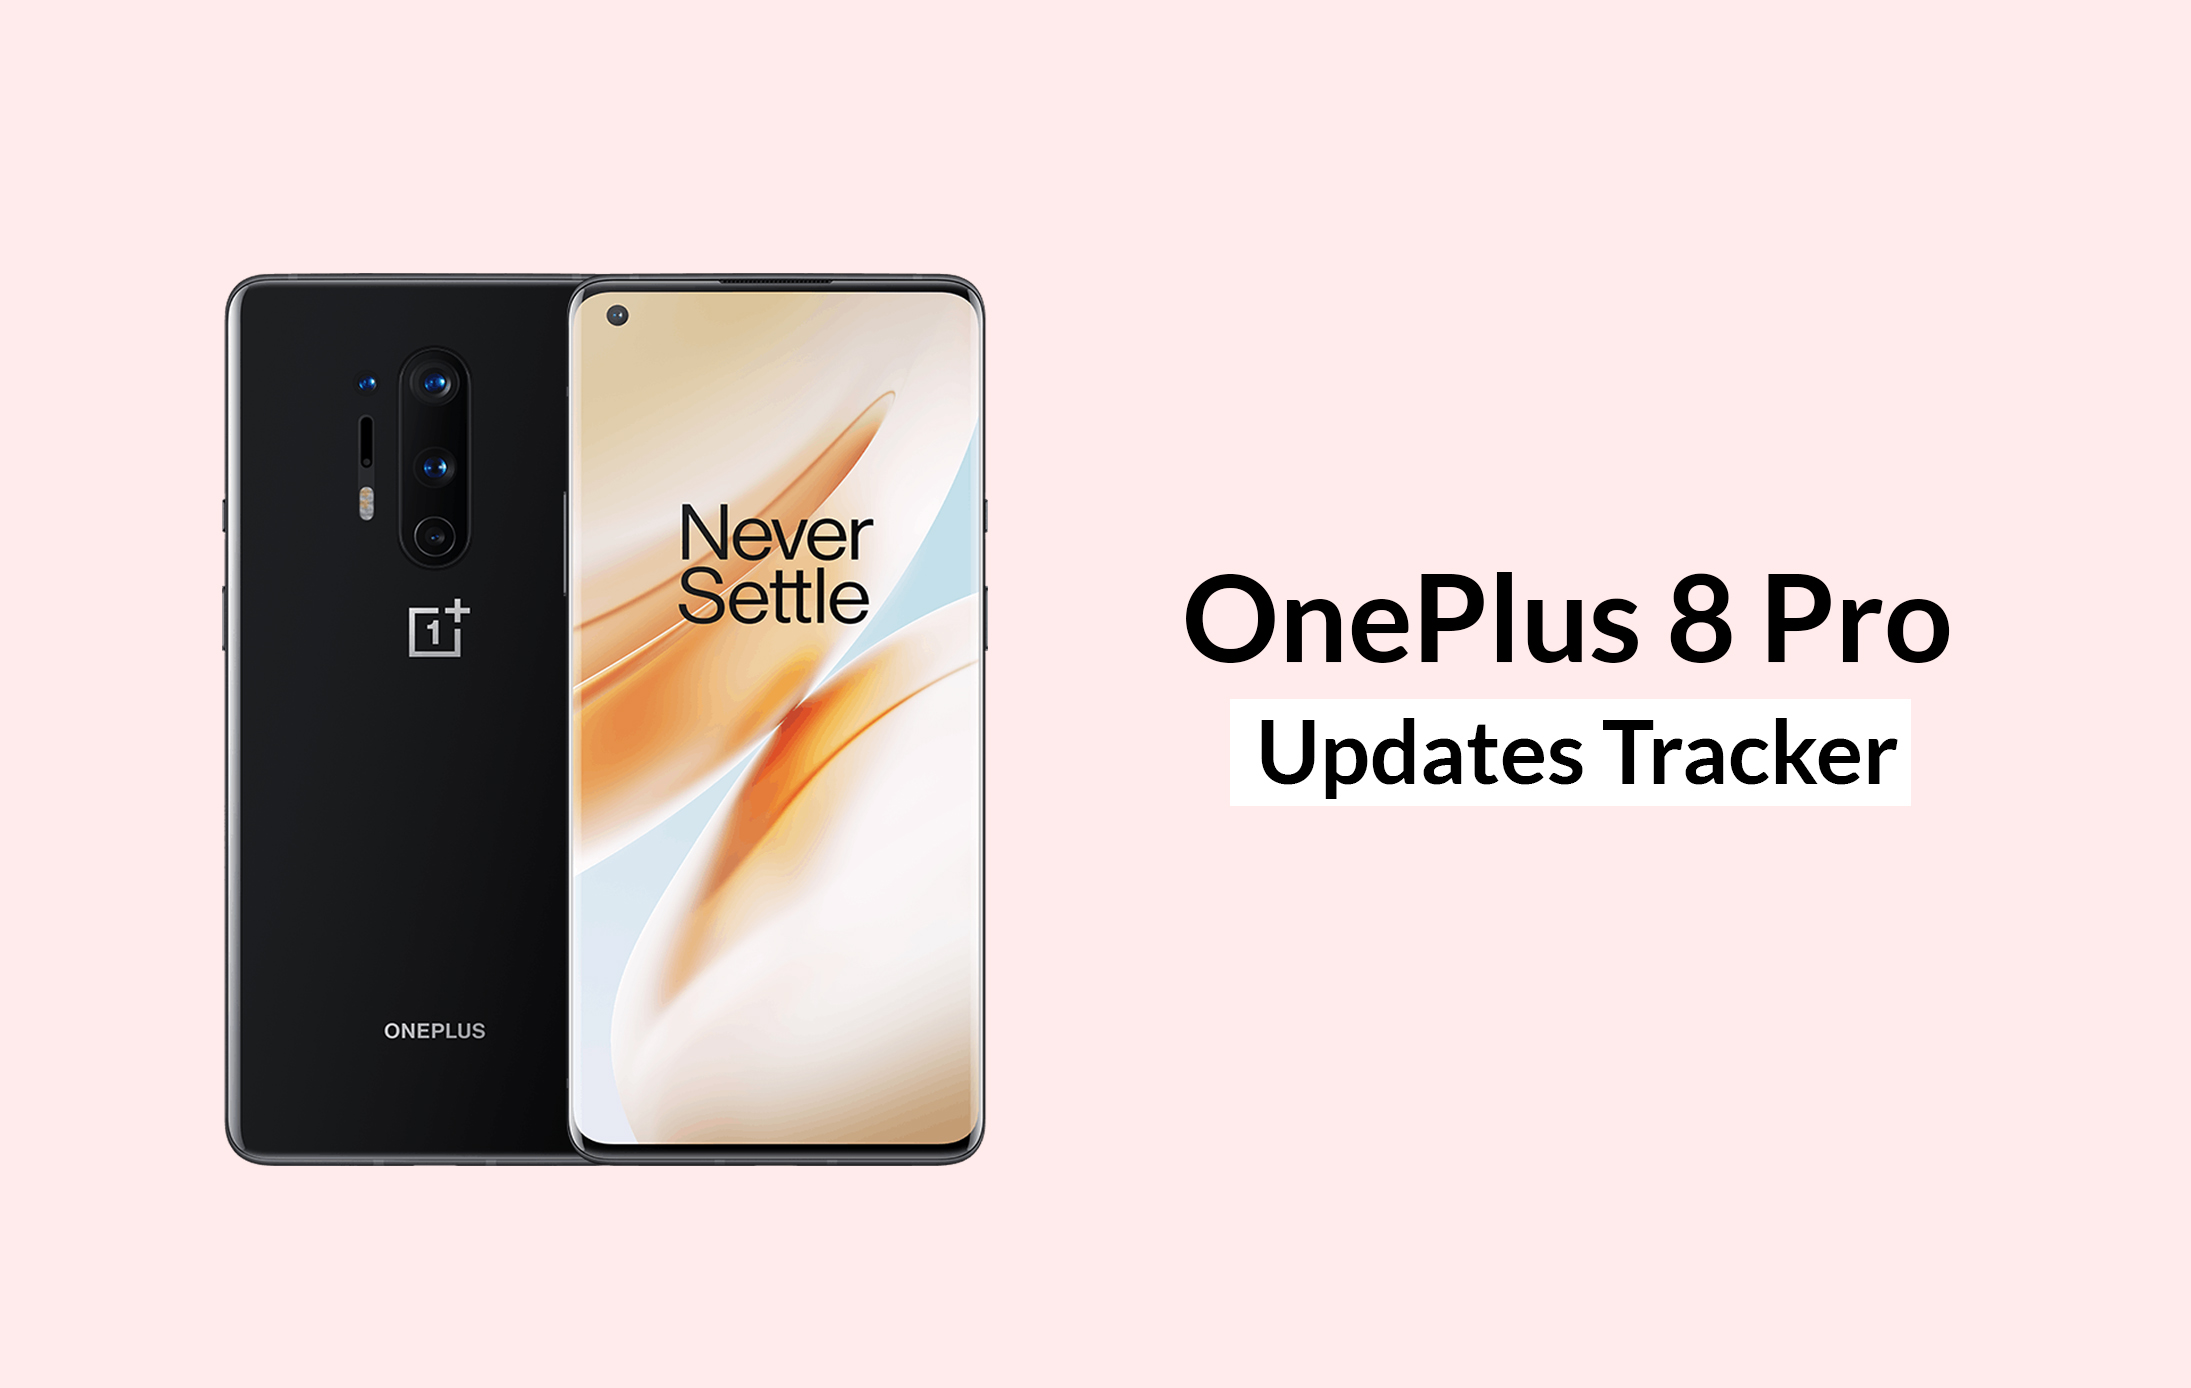 OnePlus 8 Pro Updates Tracker